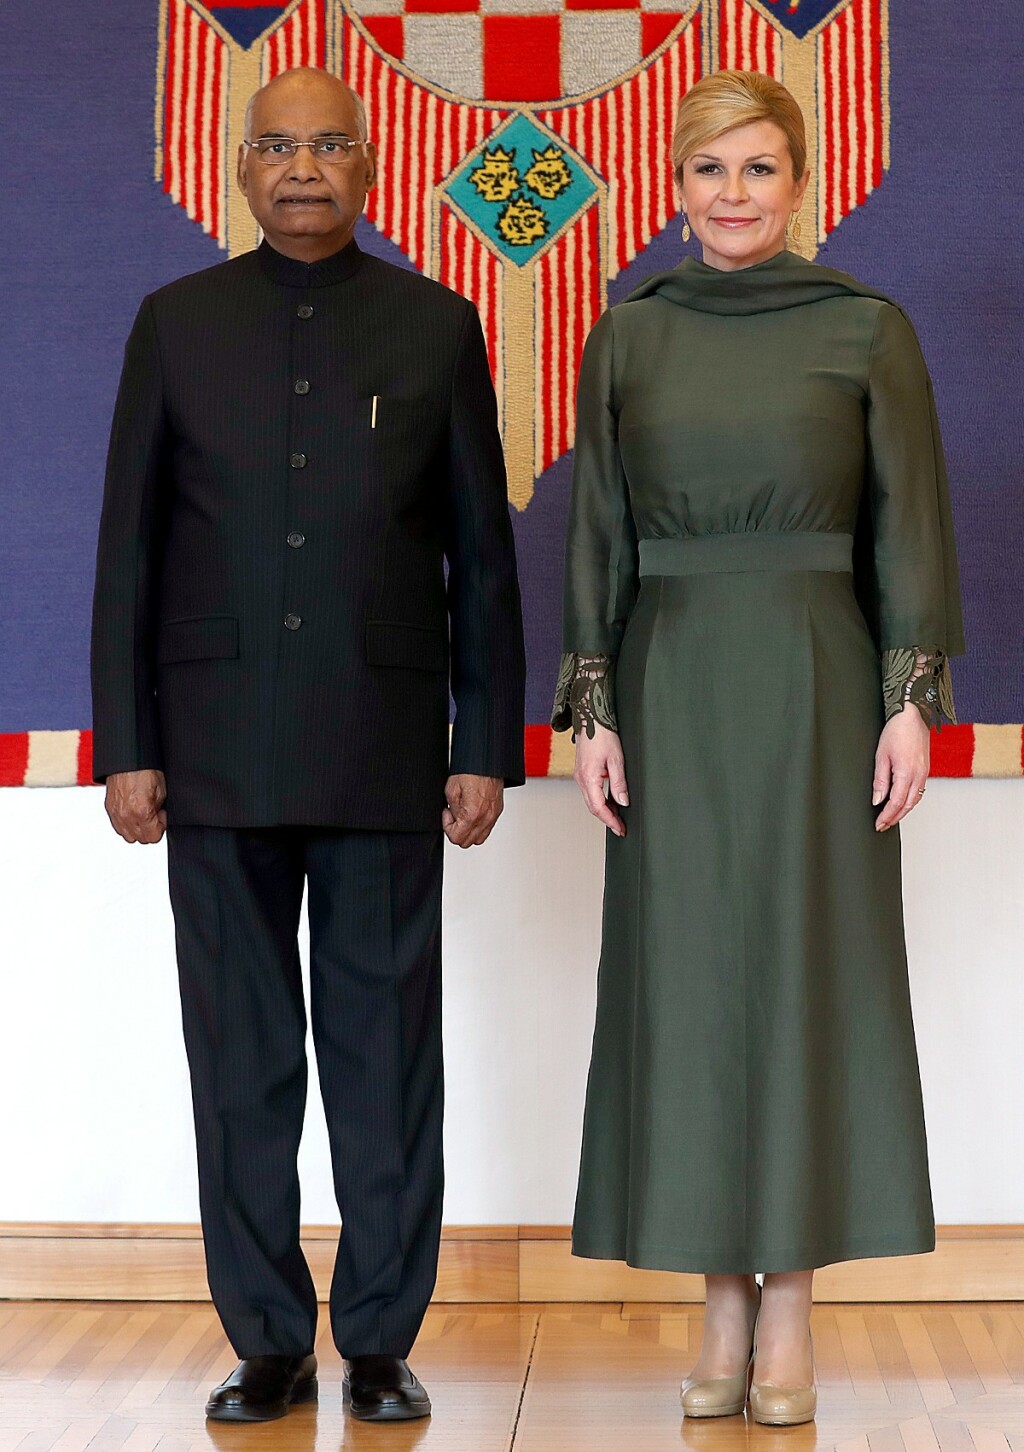 Kolinda Grabar-Kitarovic primila predsjednika Republike Indije Rama Natha Kovinda 2019. godine